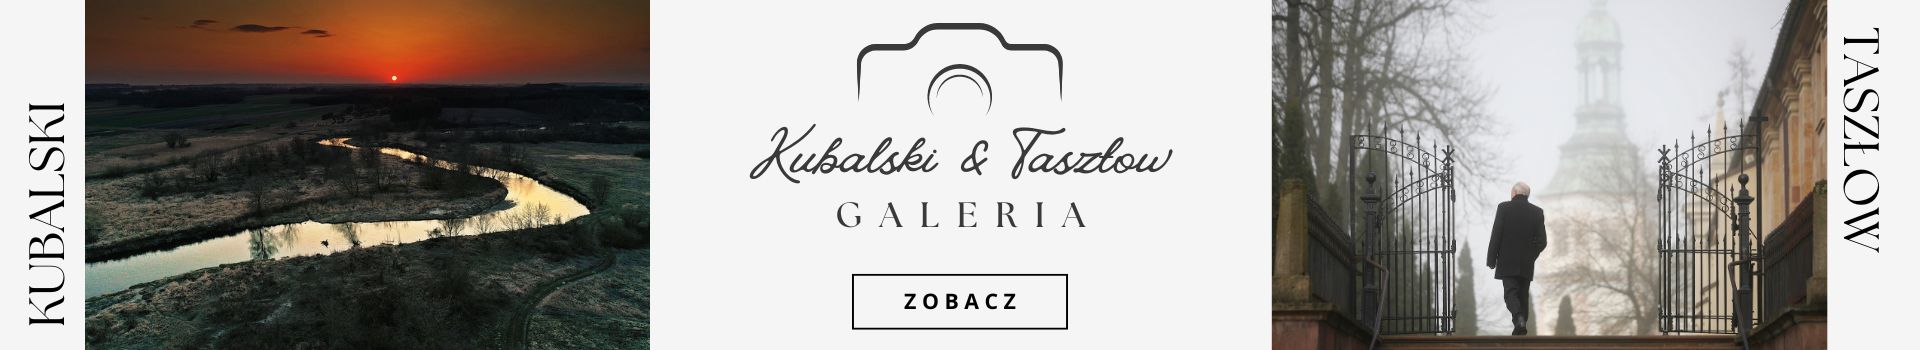 Galeria Kubalski & Taszłow